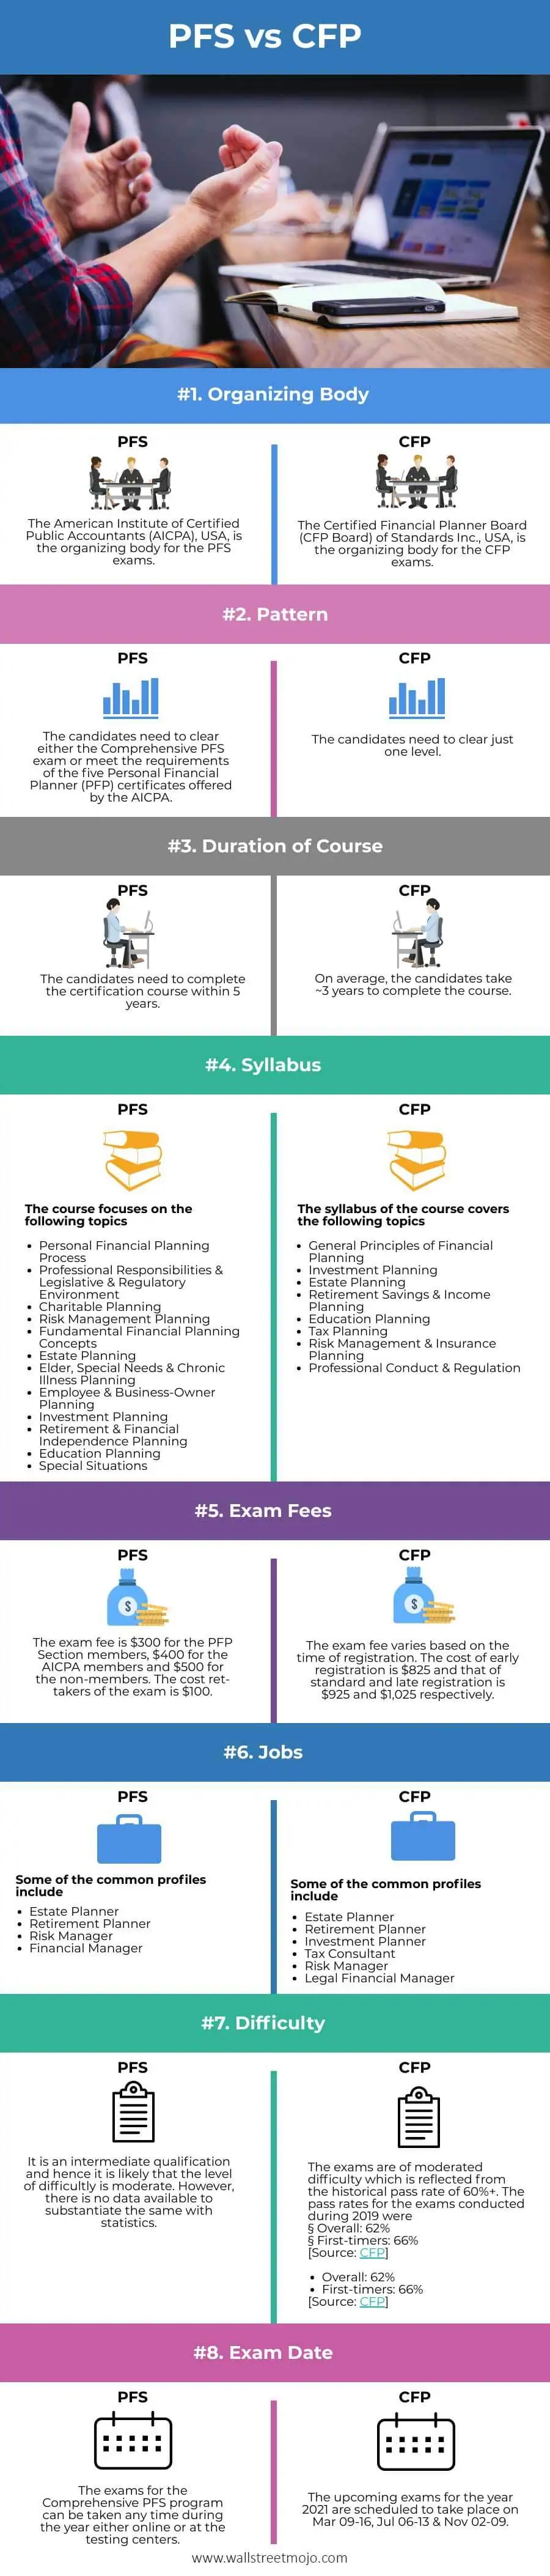 infografica PFS-vs-CFP